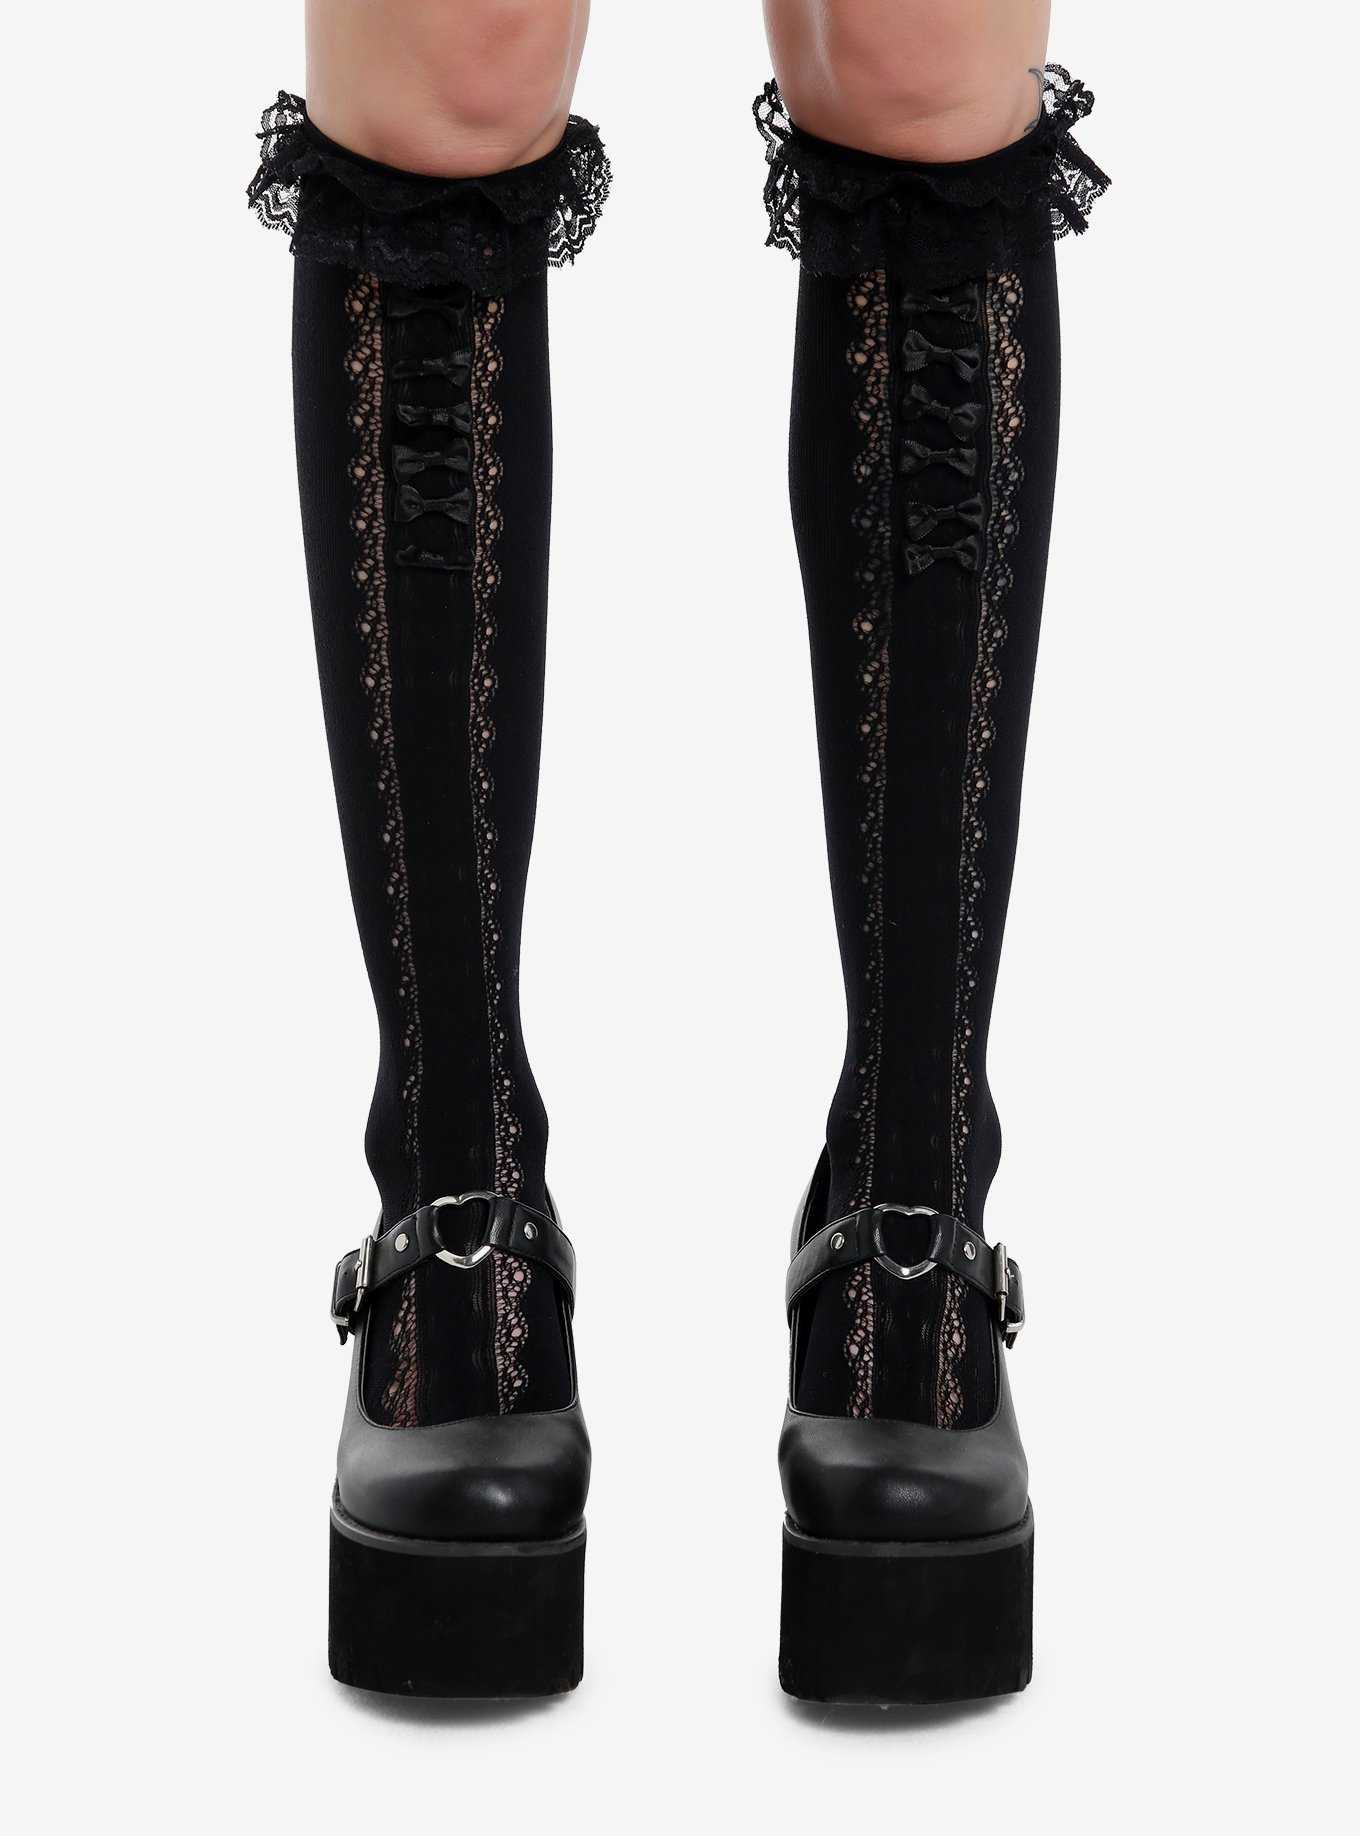 Black Lace Bow Knee-High Socks, , hi-res